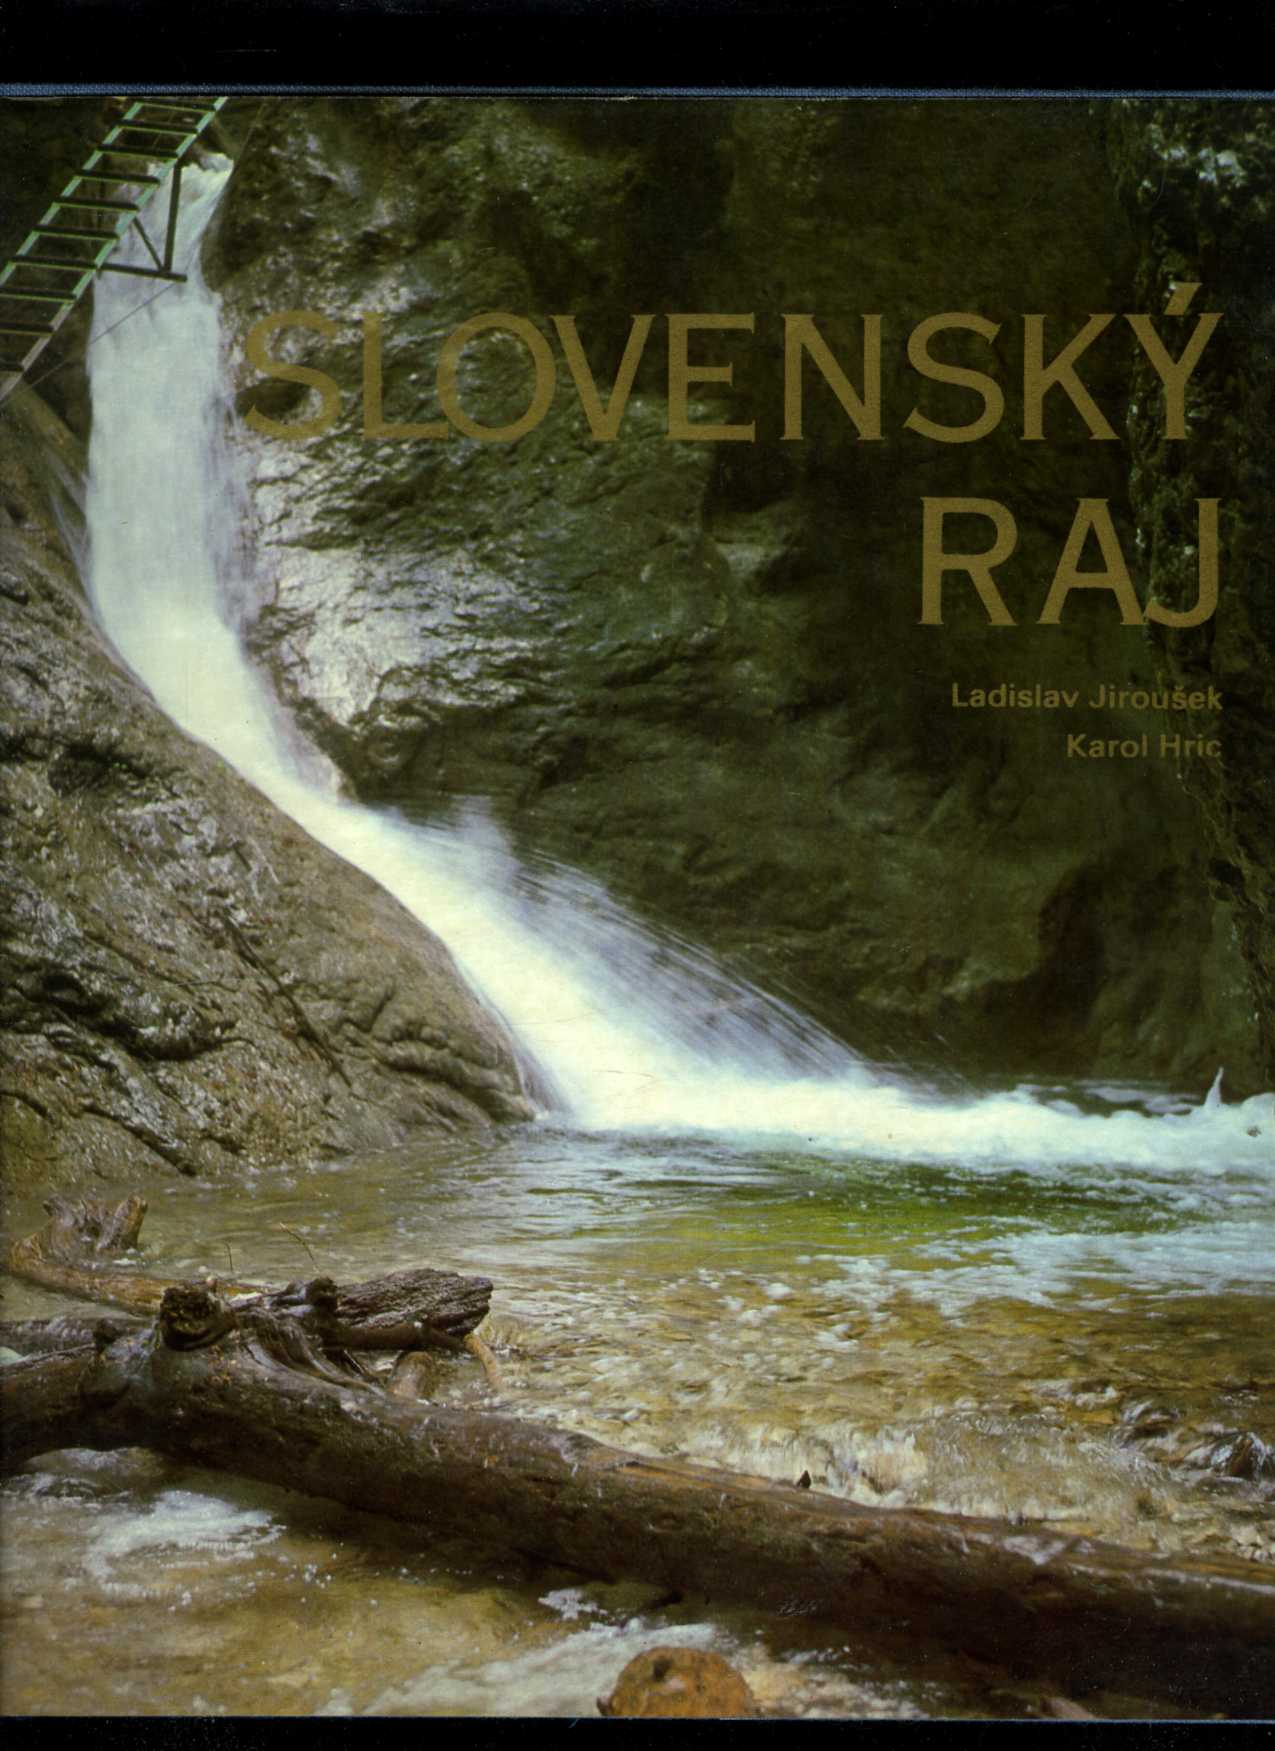 Slovenský raj (Ladislav Jiroušek, Karol Hric)